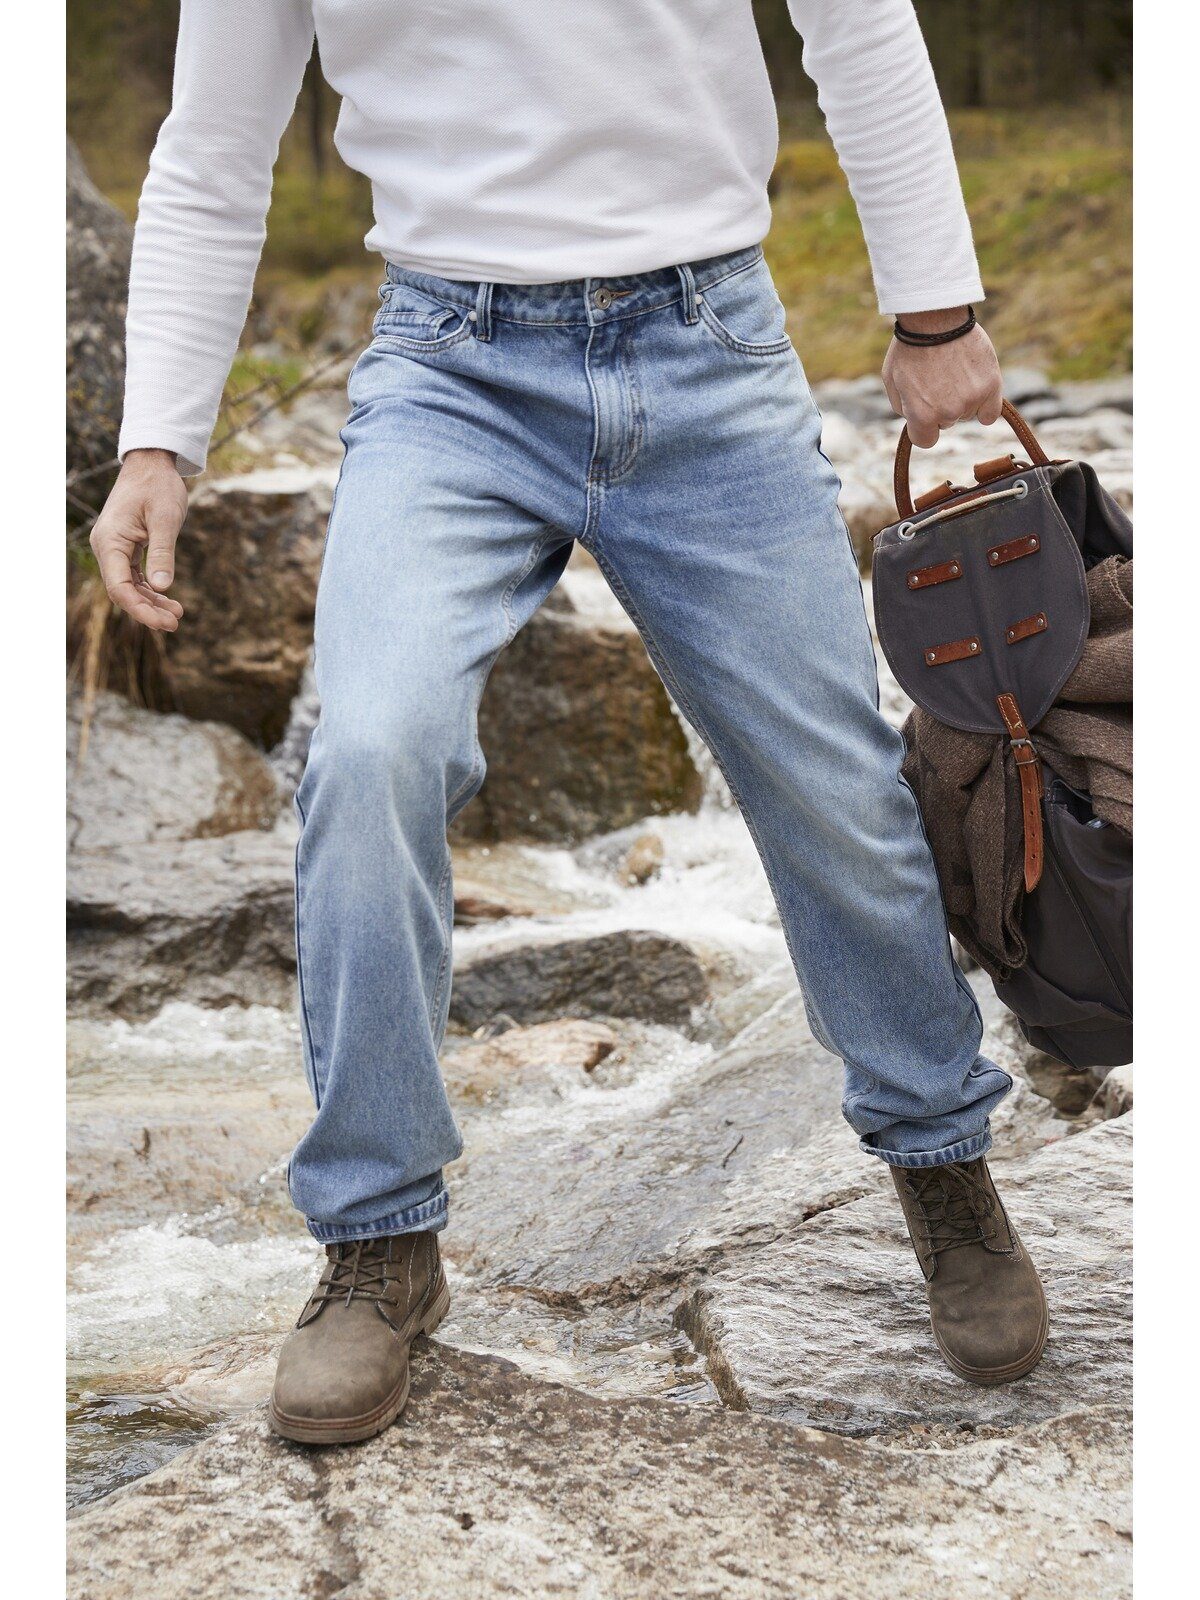 Five-Pocket-Style SIGUROR Comfort-fit-Jeans in Jan Vanderstorm